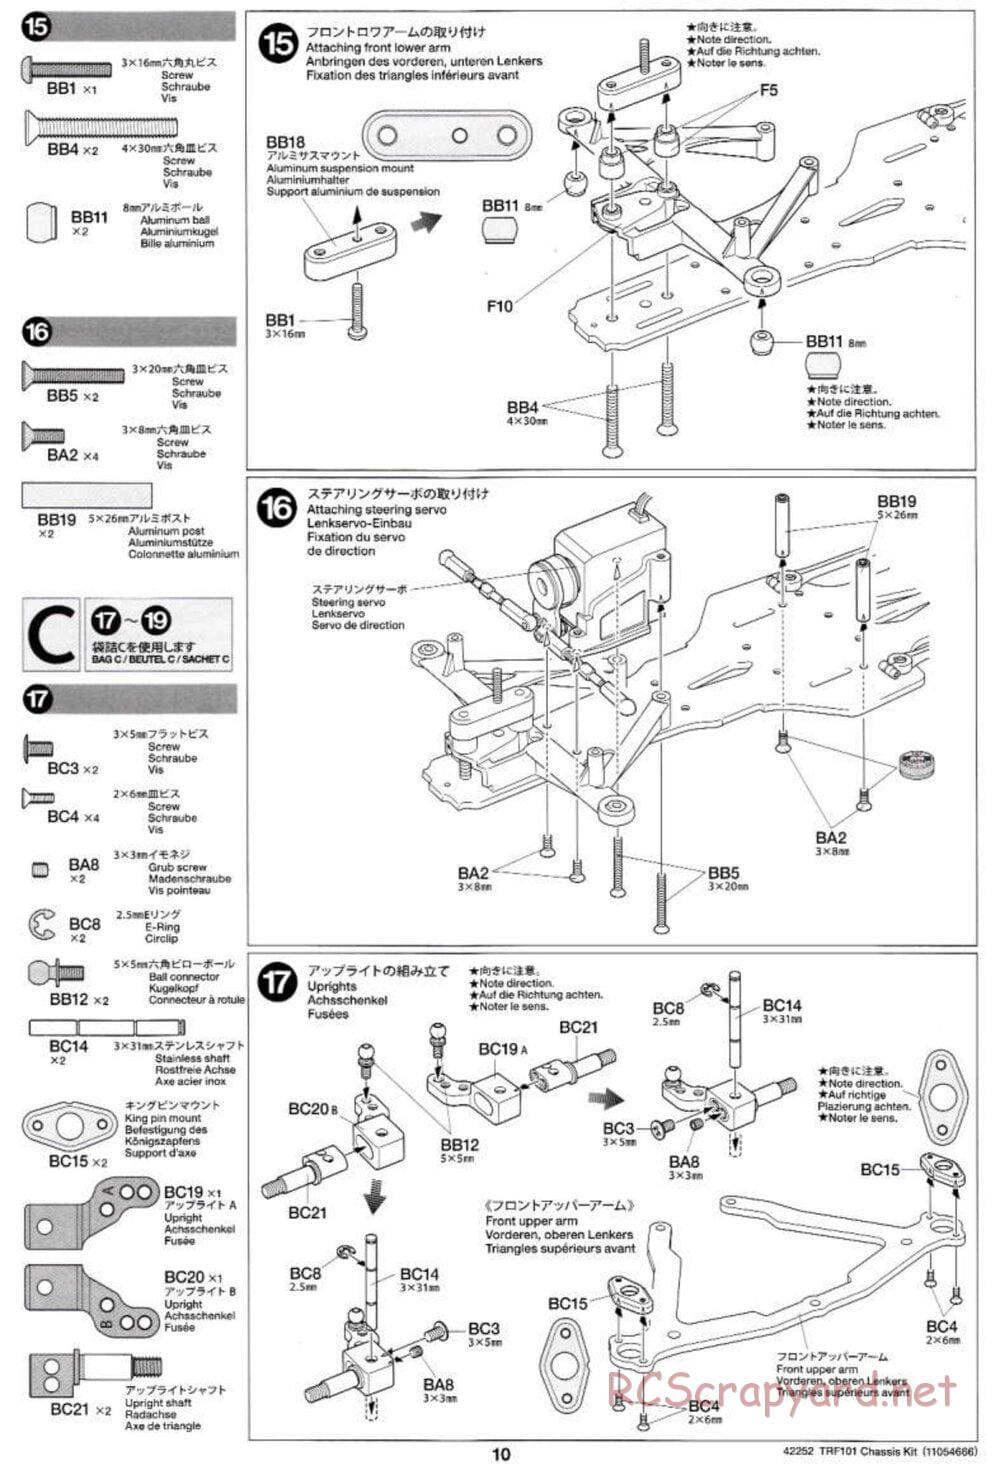 Tamiya - TRF101 Chassis - Manual - Page 10